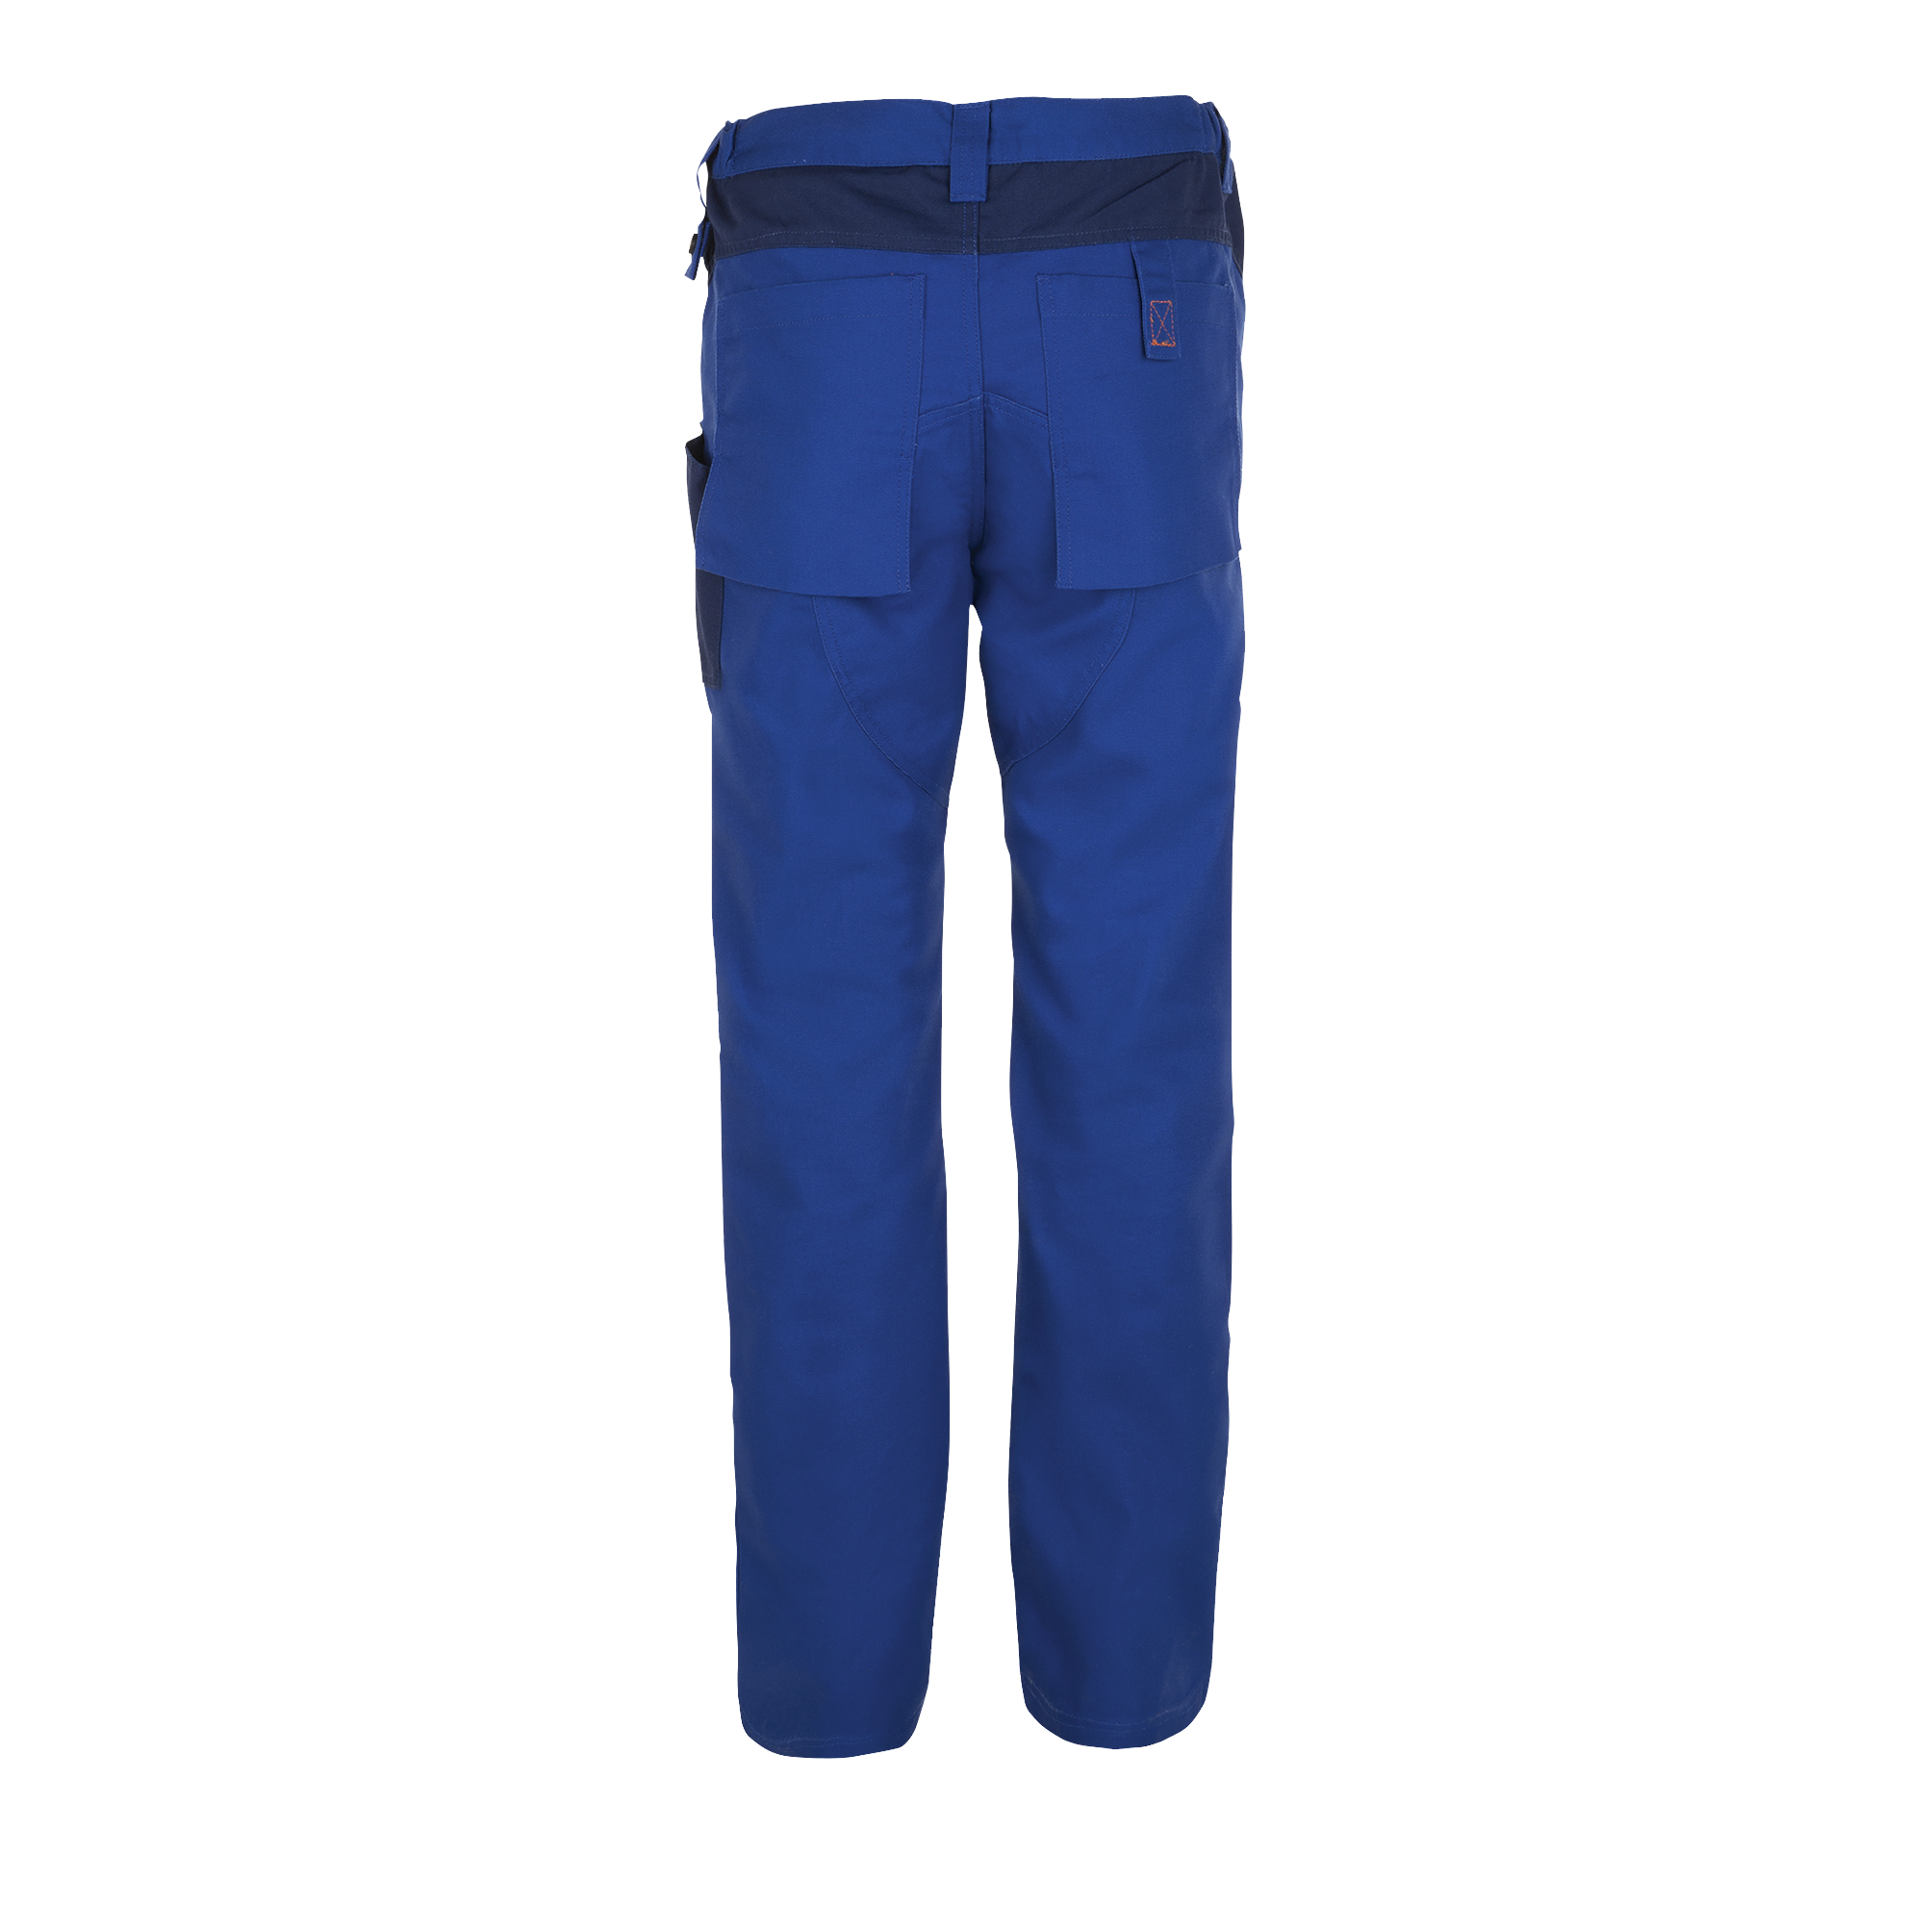 images/stories/virtuemart/sols20/4709_pantalon_bicolore_workwear_homme_metal_pro_bugatti_blue__navy_pro_dos